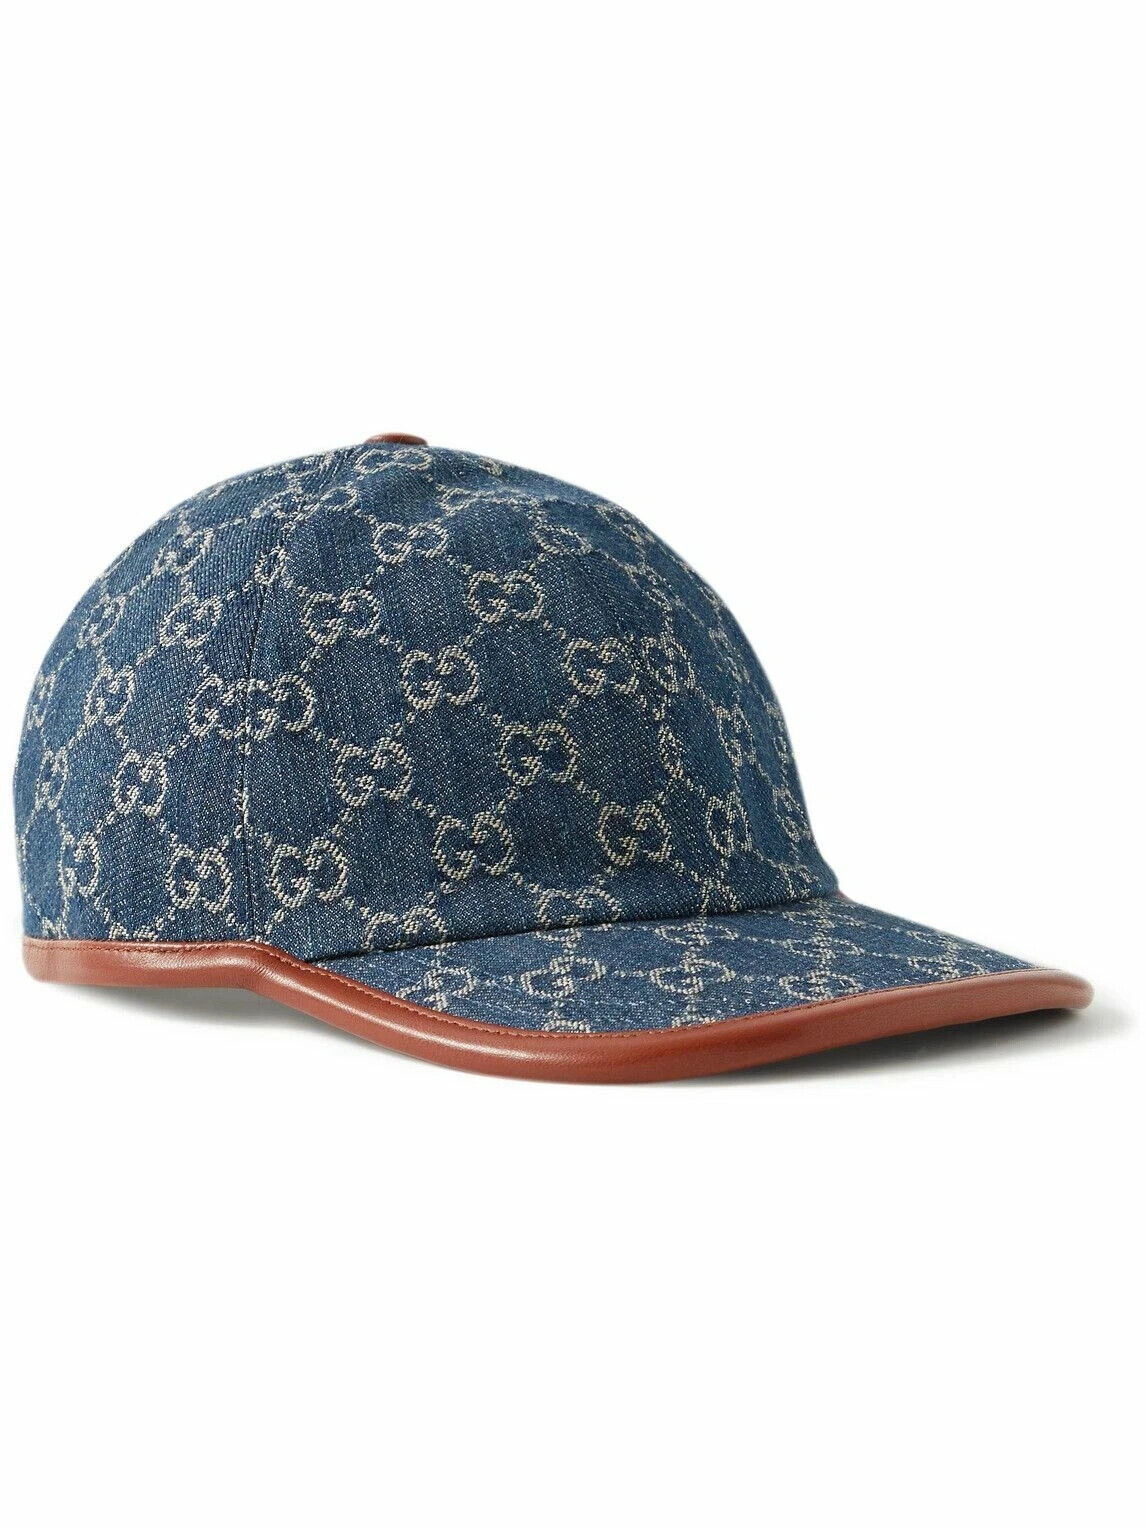 Gucci GG Supreme Monogram Denim Canvas Baseball Cap Bucket Hat Leather Brim.